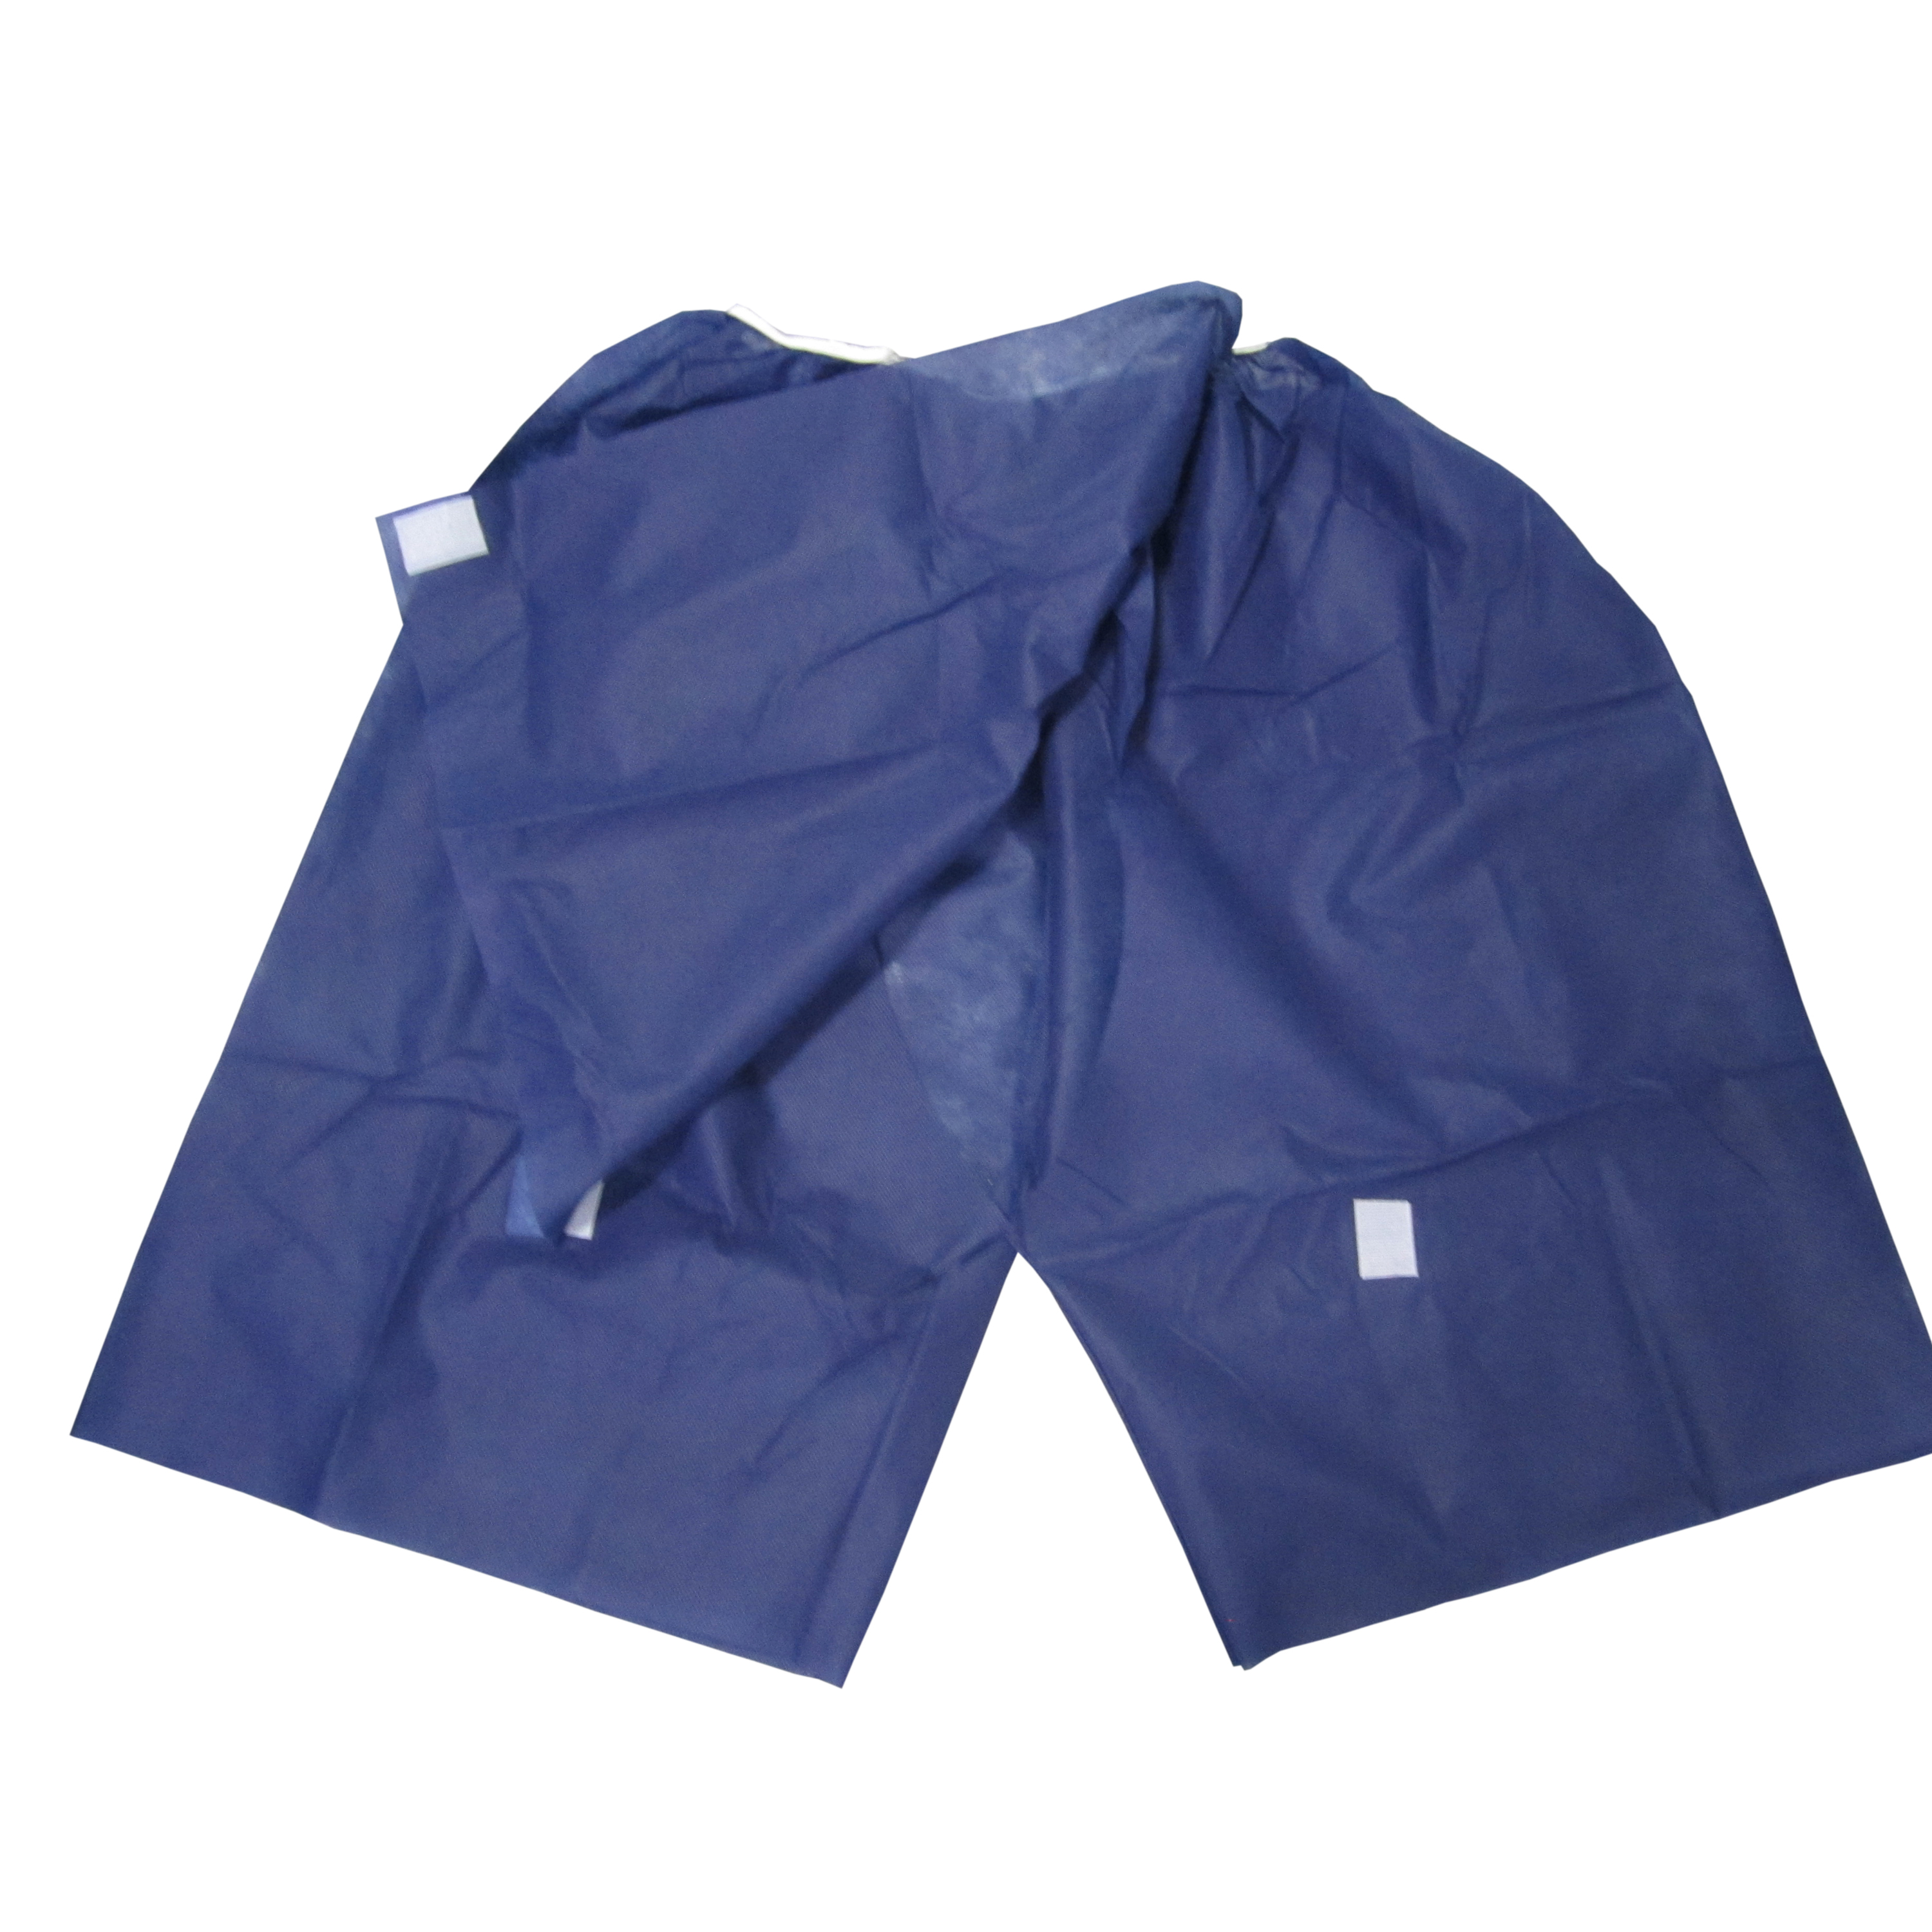 Nonwoven PP dark blue examination boxer for Anorectal endoscopic examination